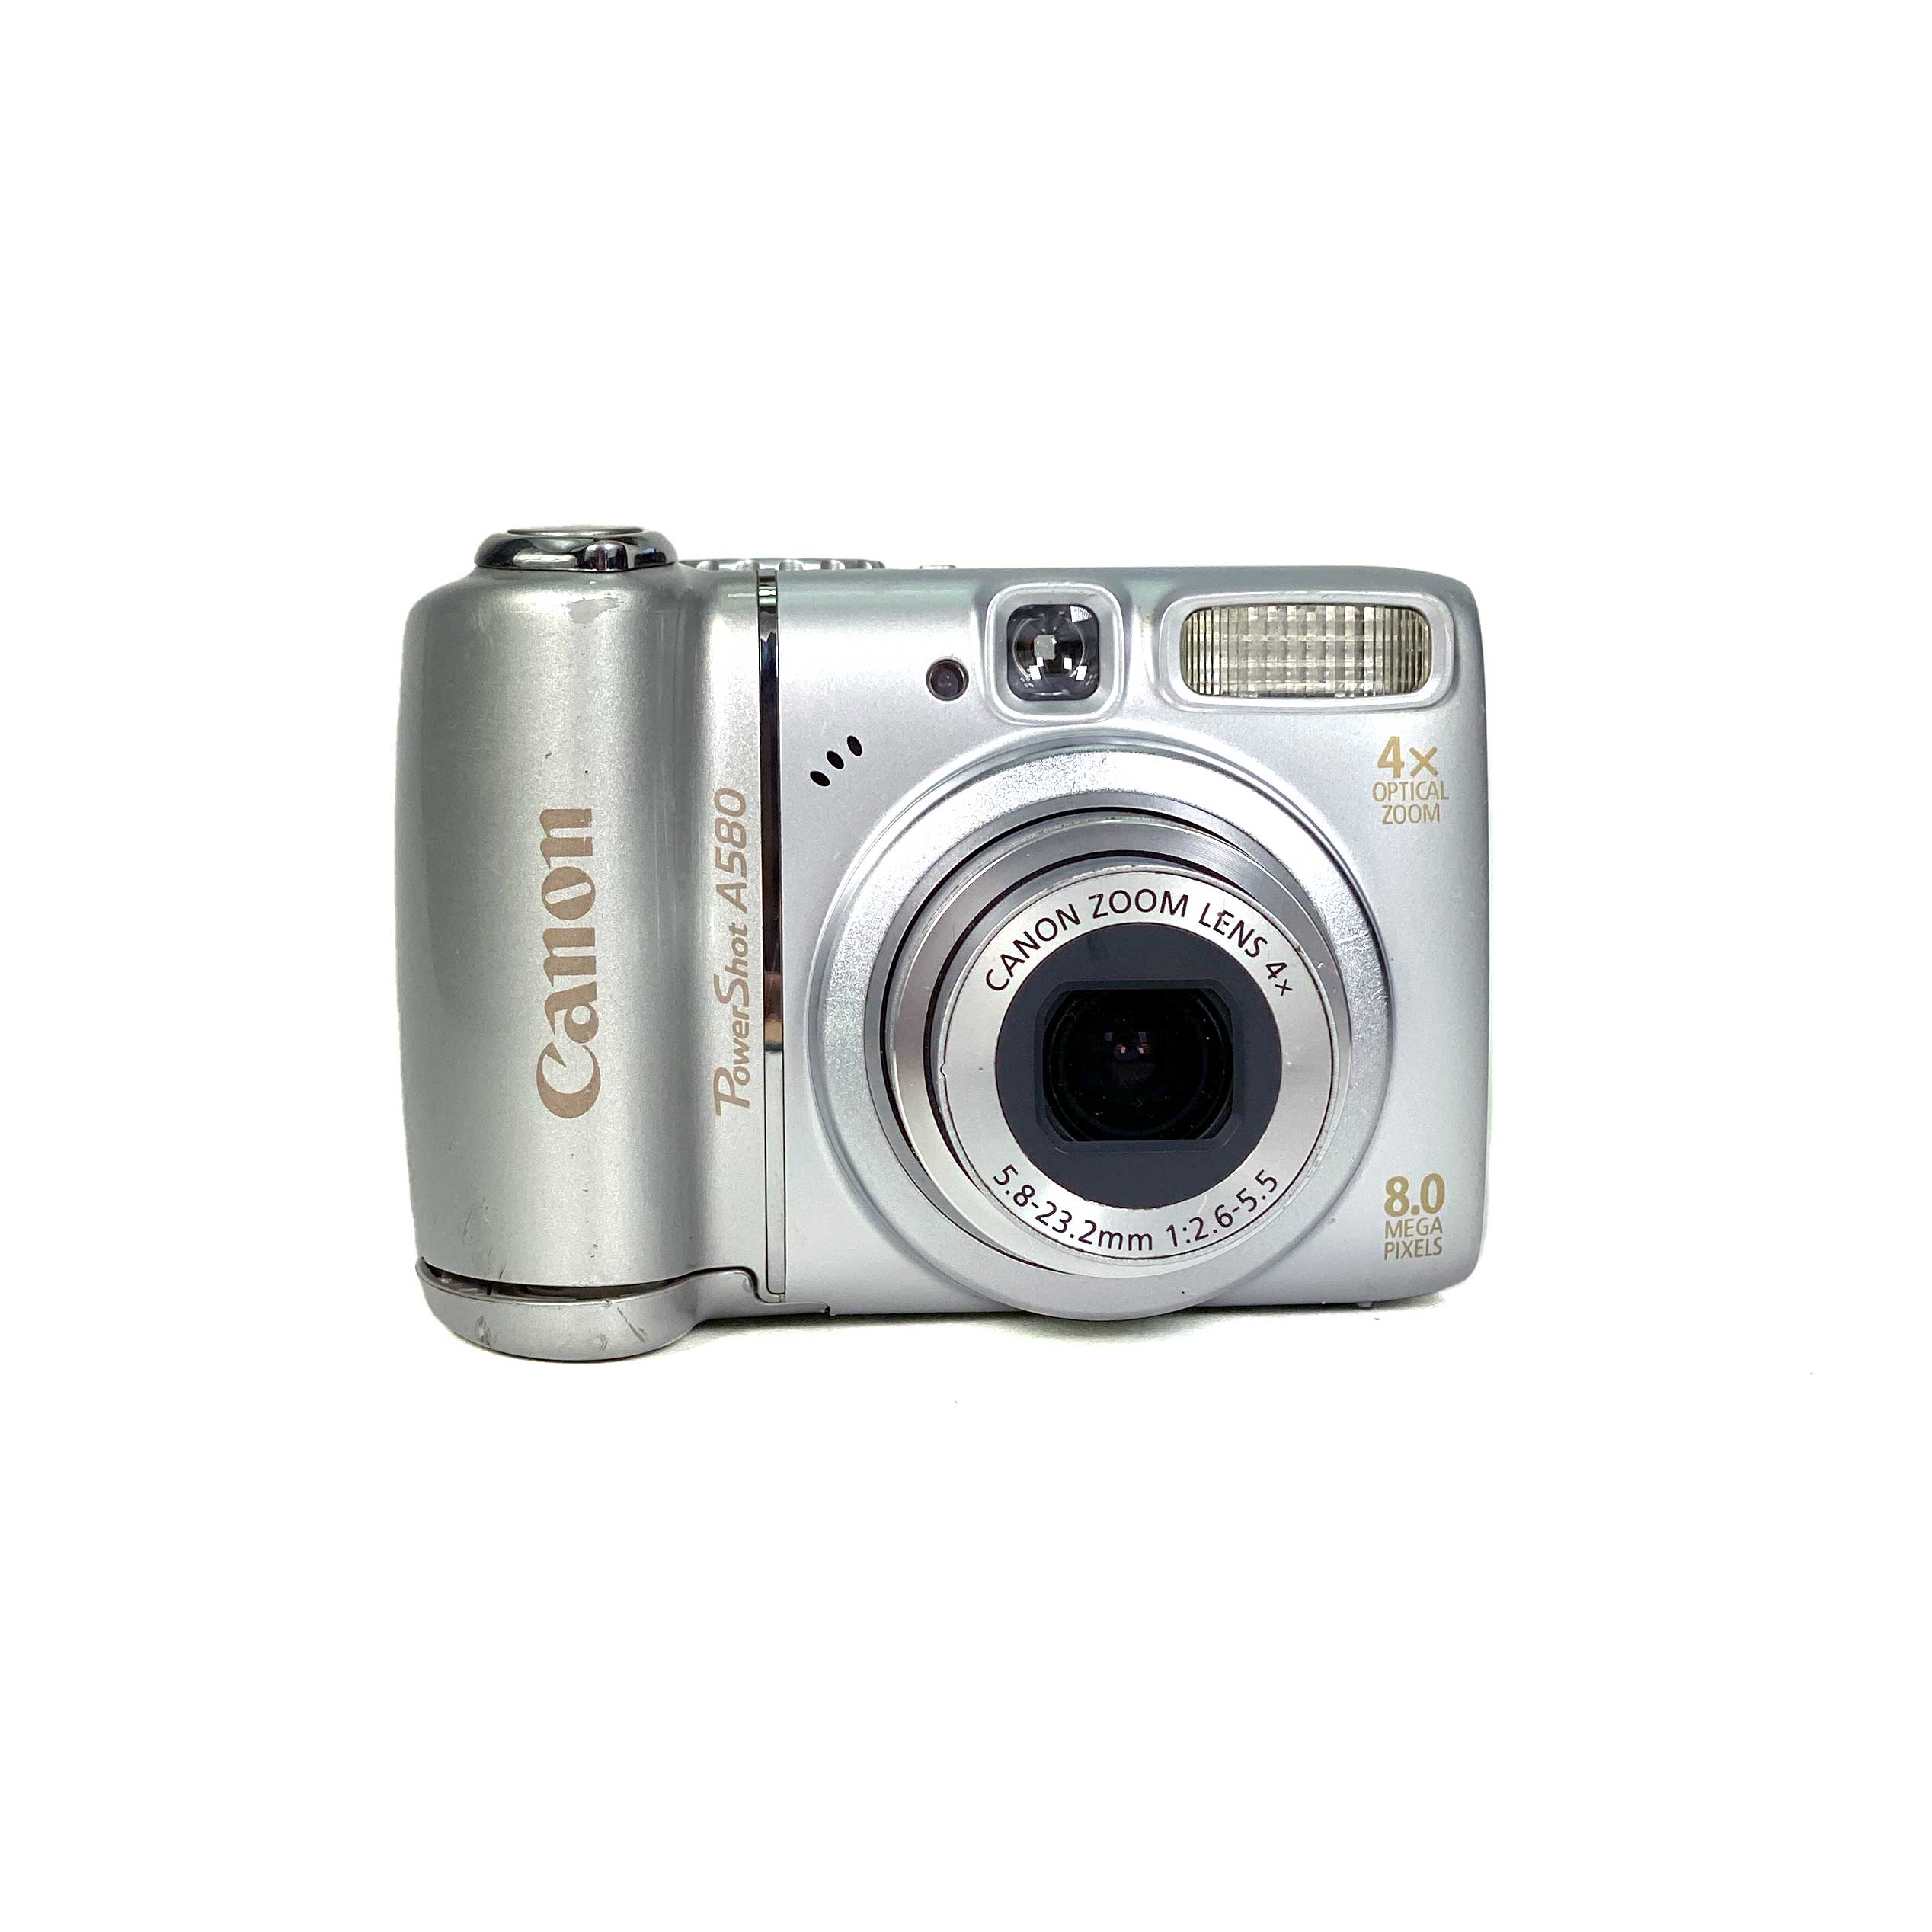 Canon PowerShot A580 Digital Compact